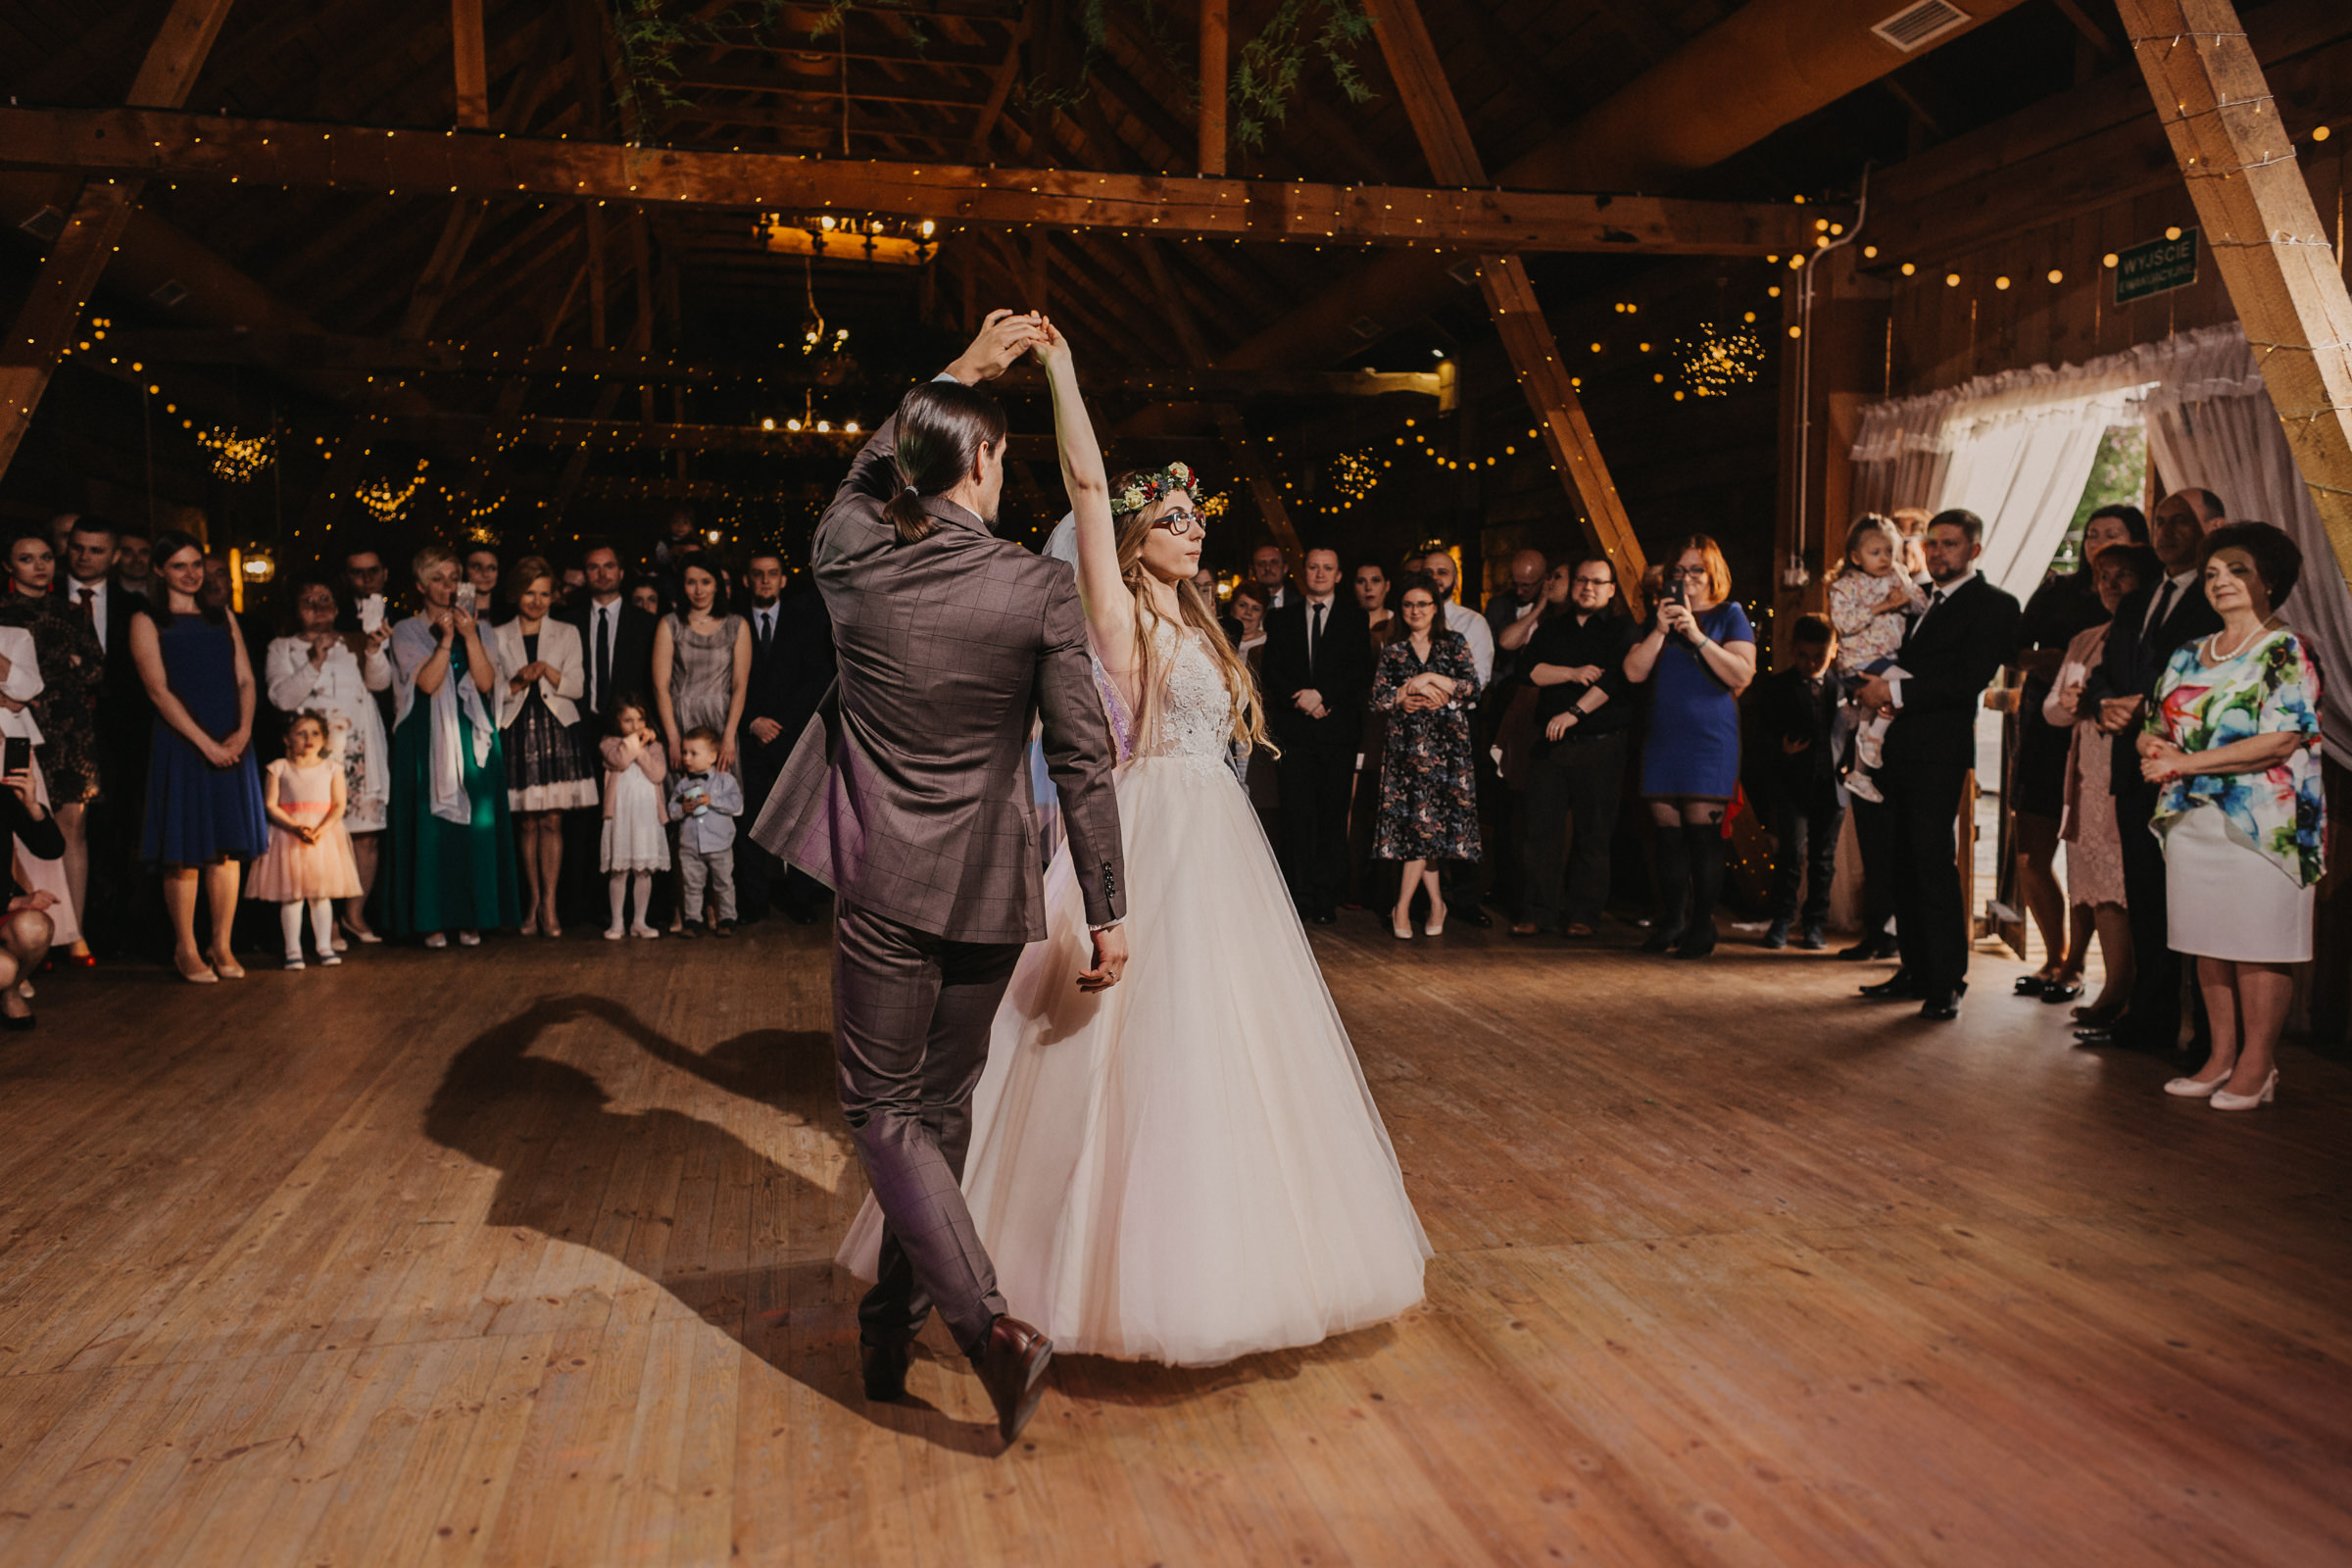 rustykalne wesele w stodole